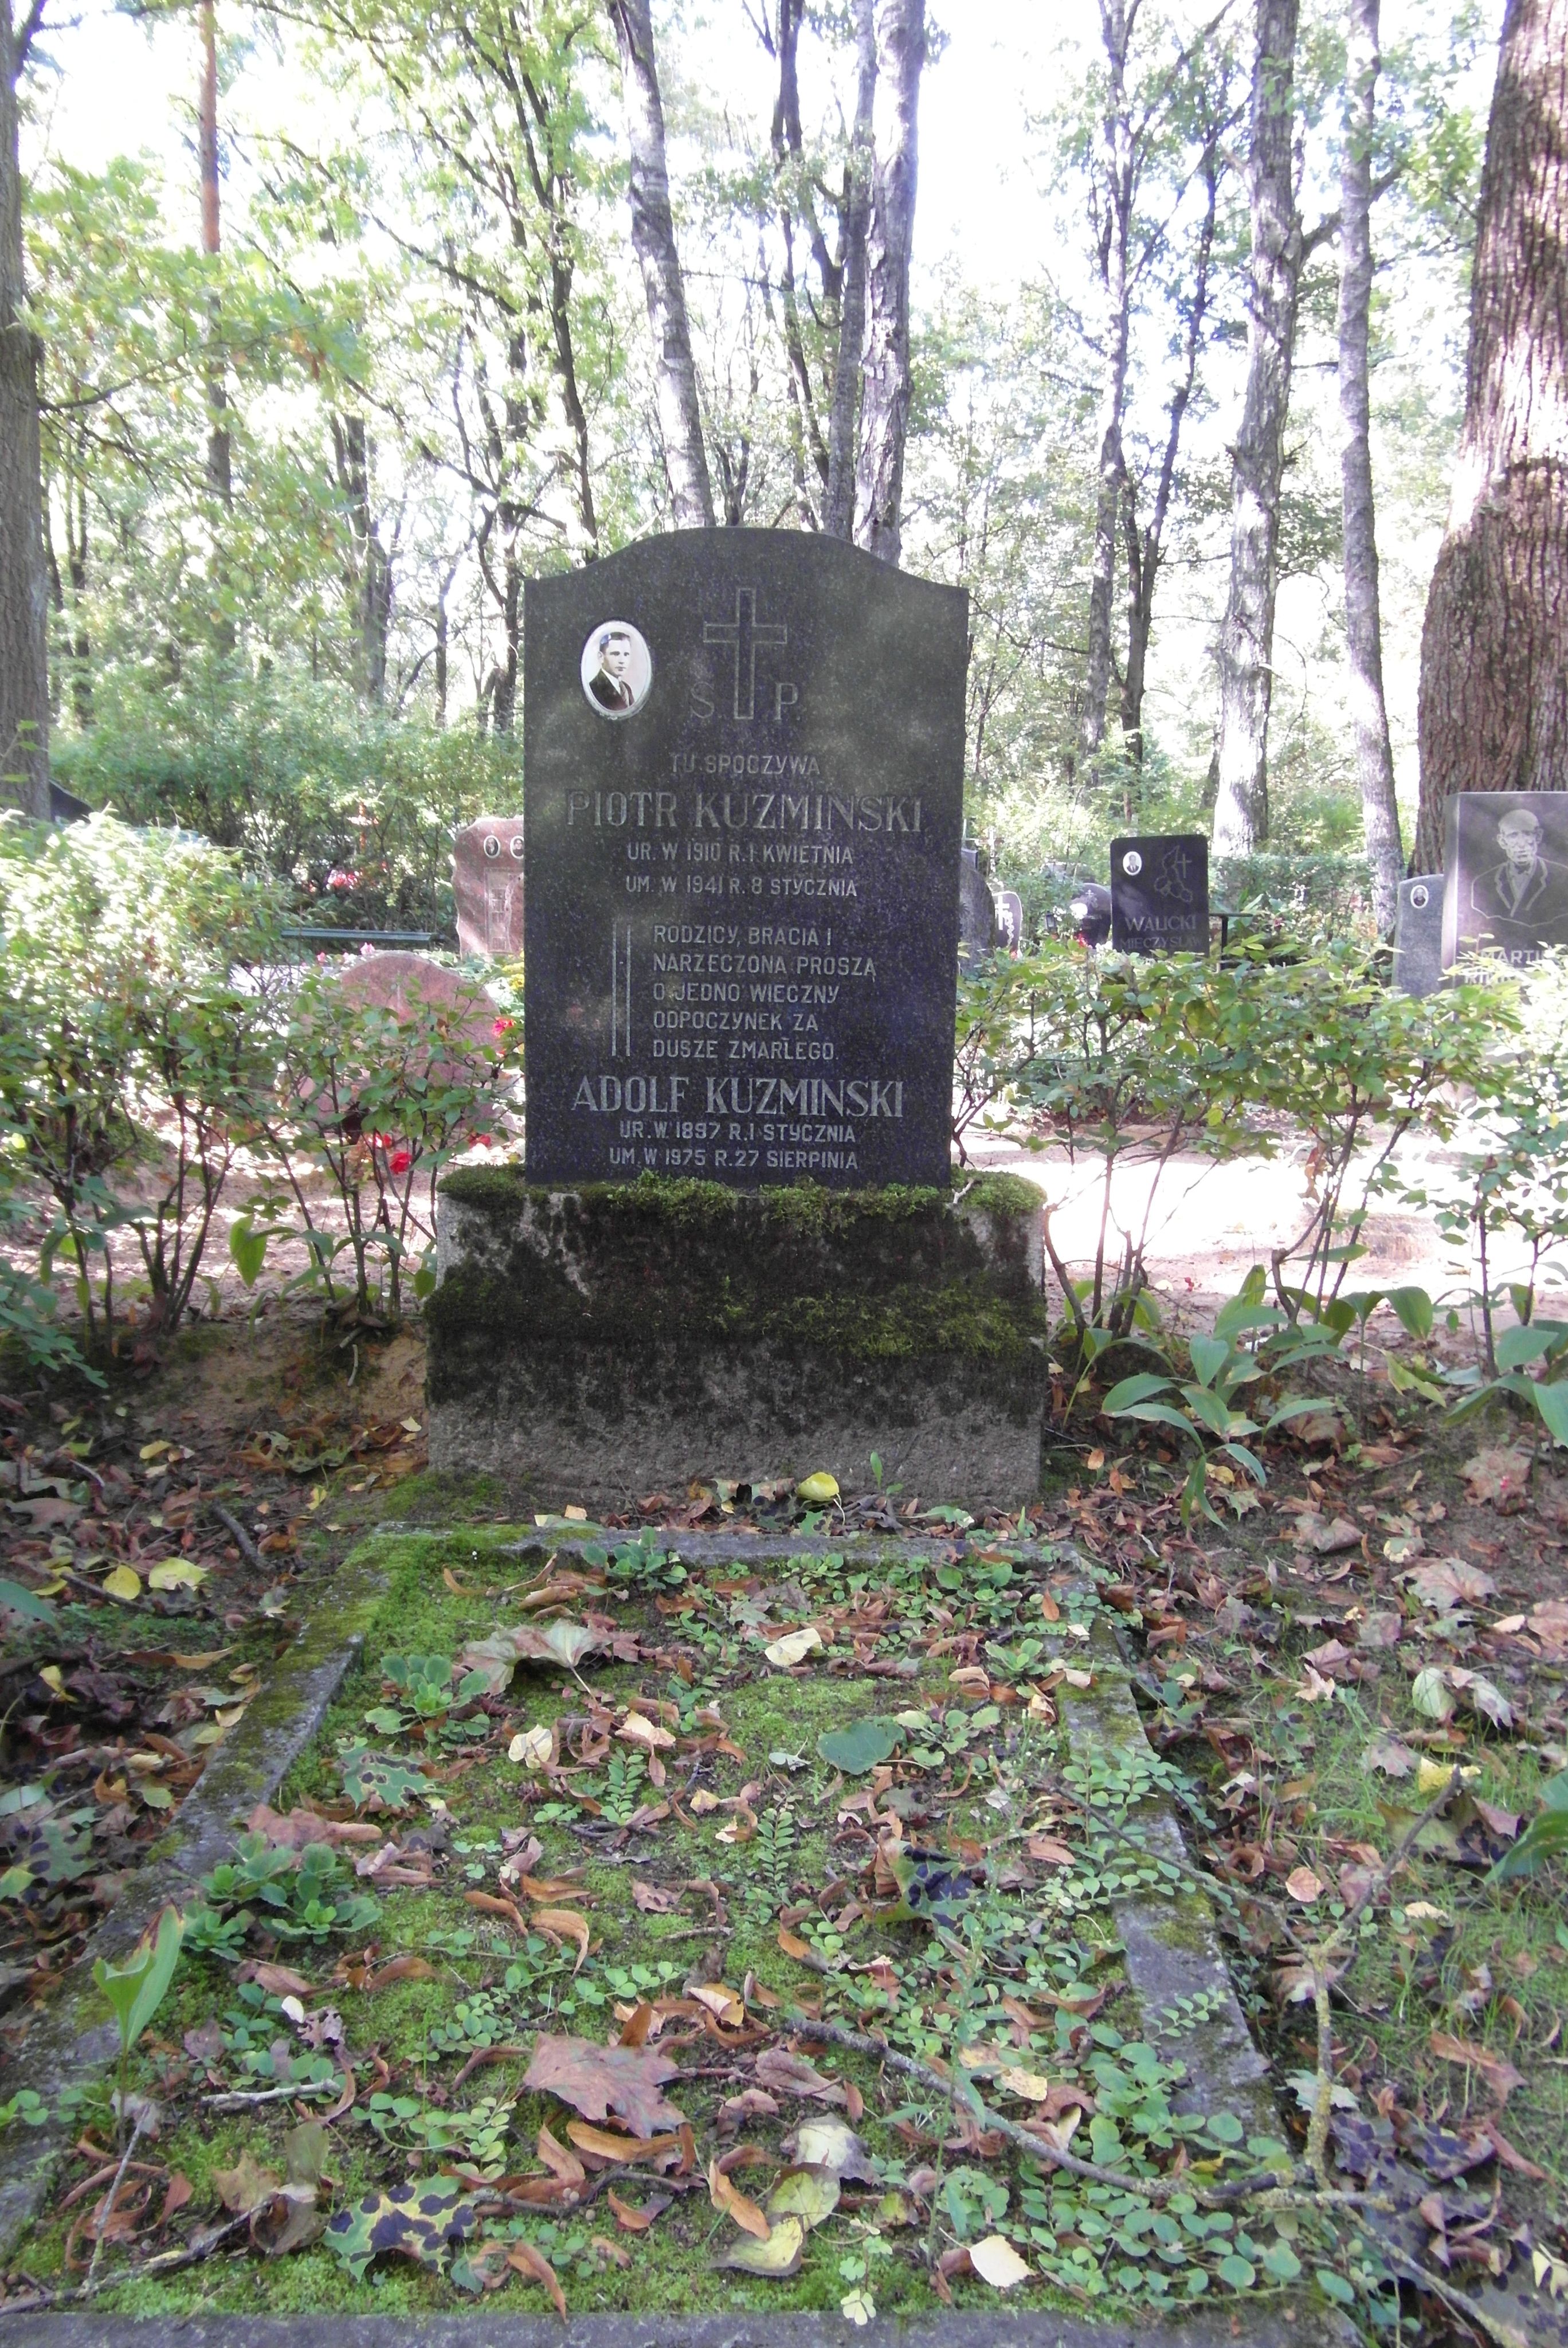 Tombstone of Adolf Kuzminski, Peter Kuzminski, St Michael's cemetery in Riga, as of 2021.